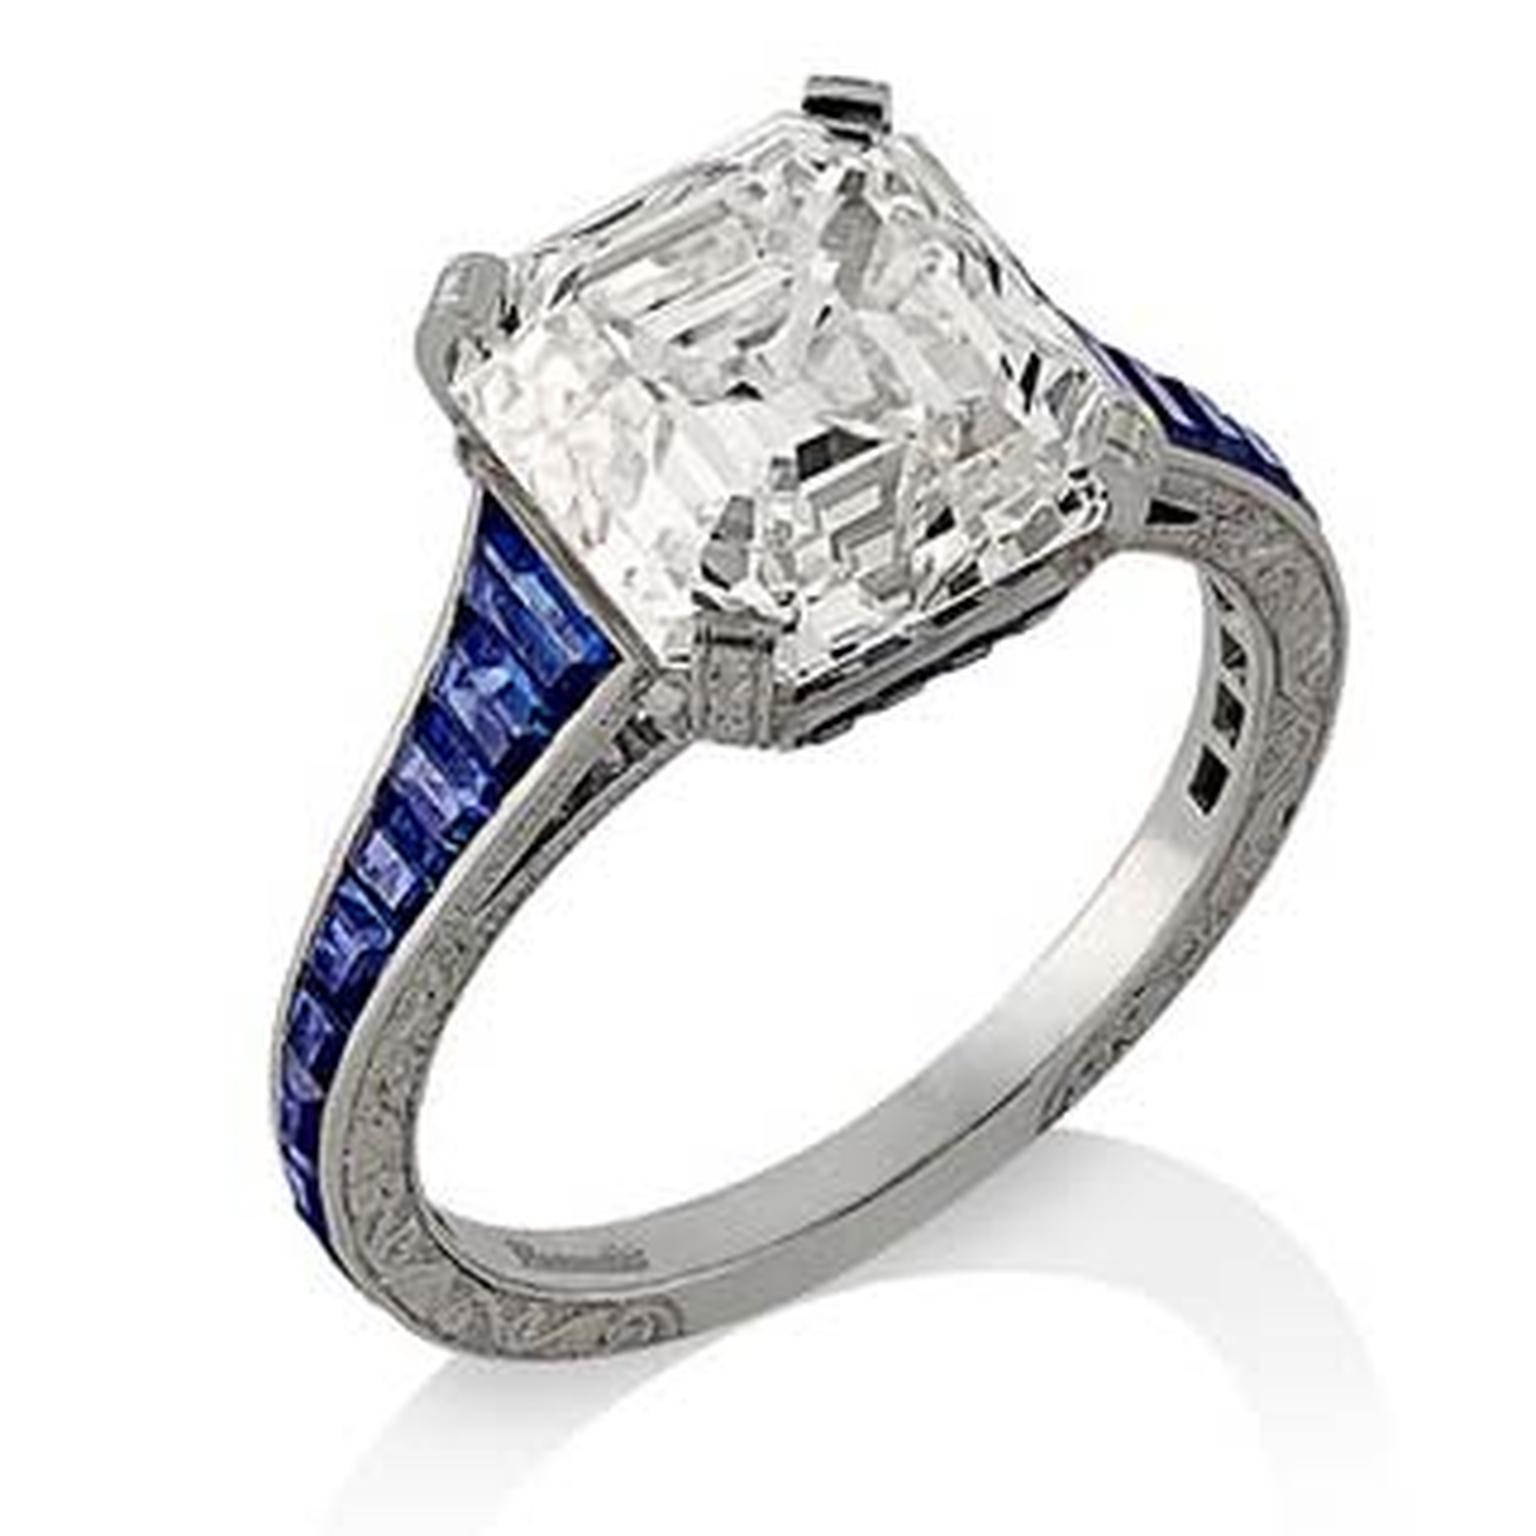 Asscher Cut Diamond Engagement Ring Hancocks Of London The Jewellery Editor